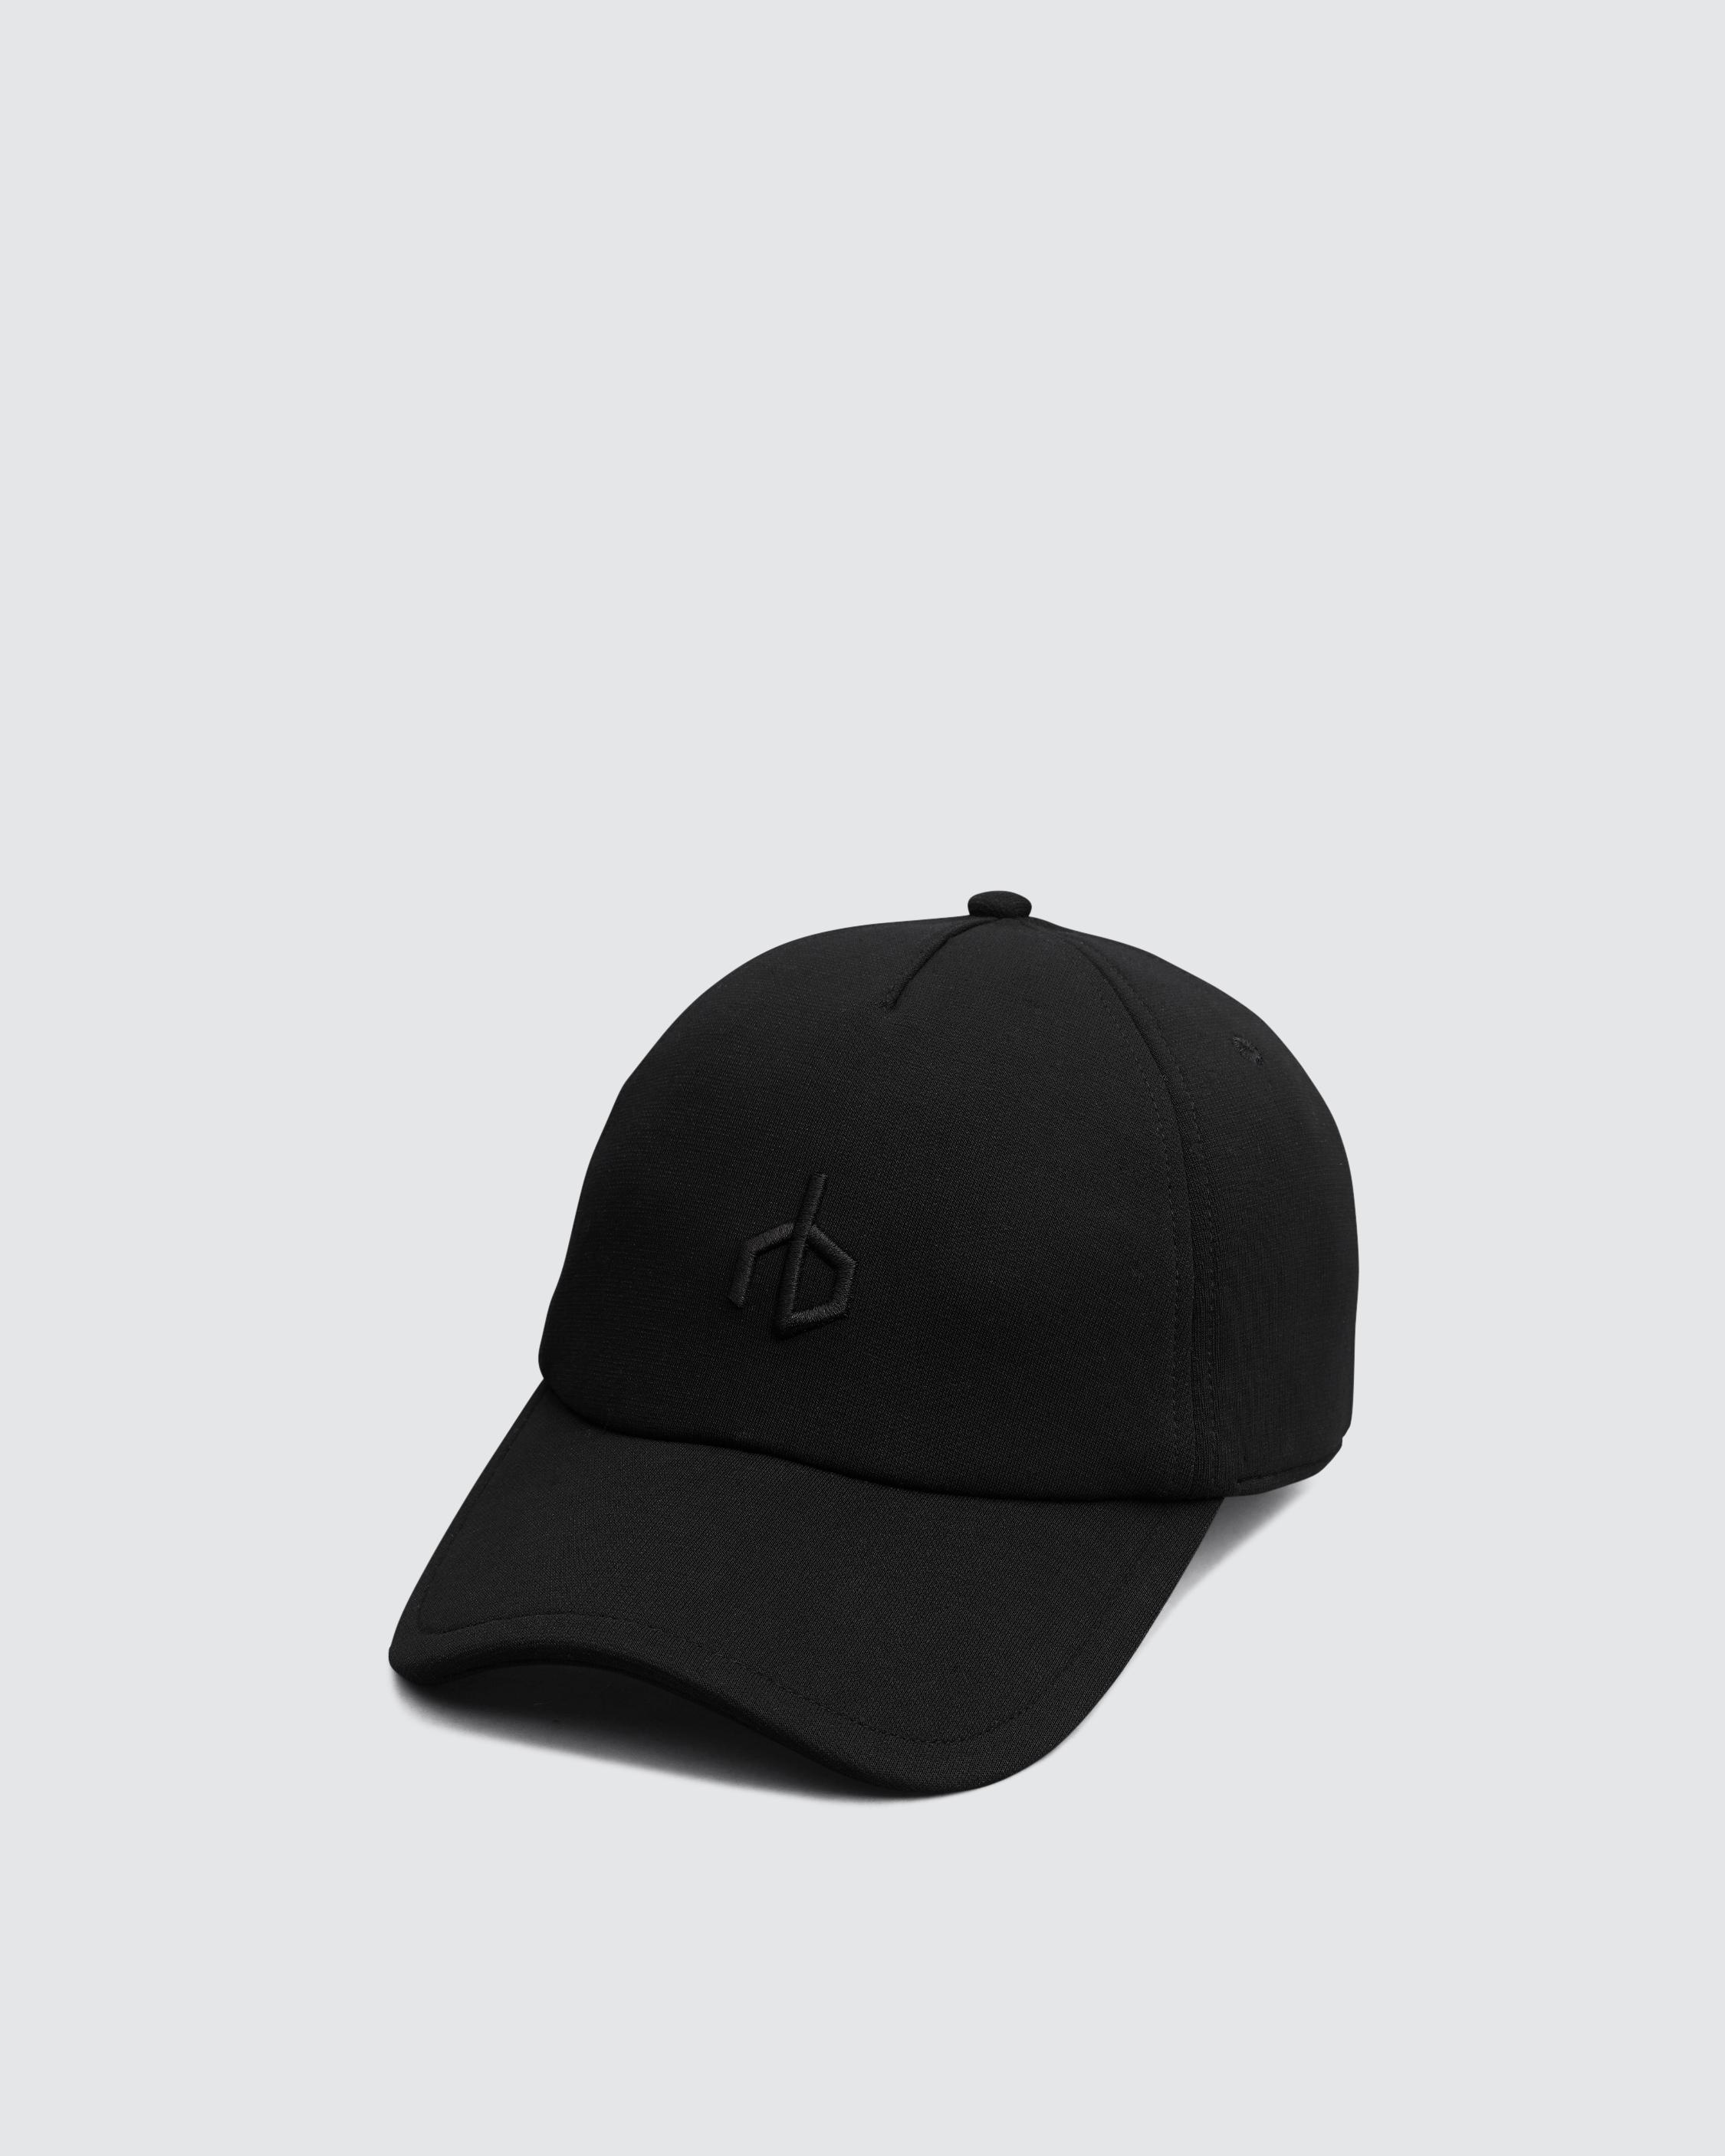 Aron Baseball Cap
Cotton Hat - 1